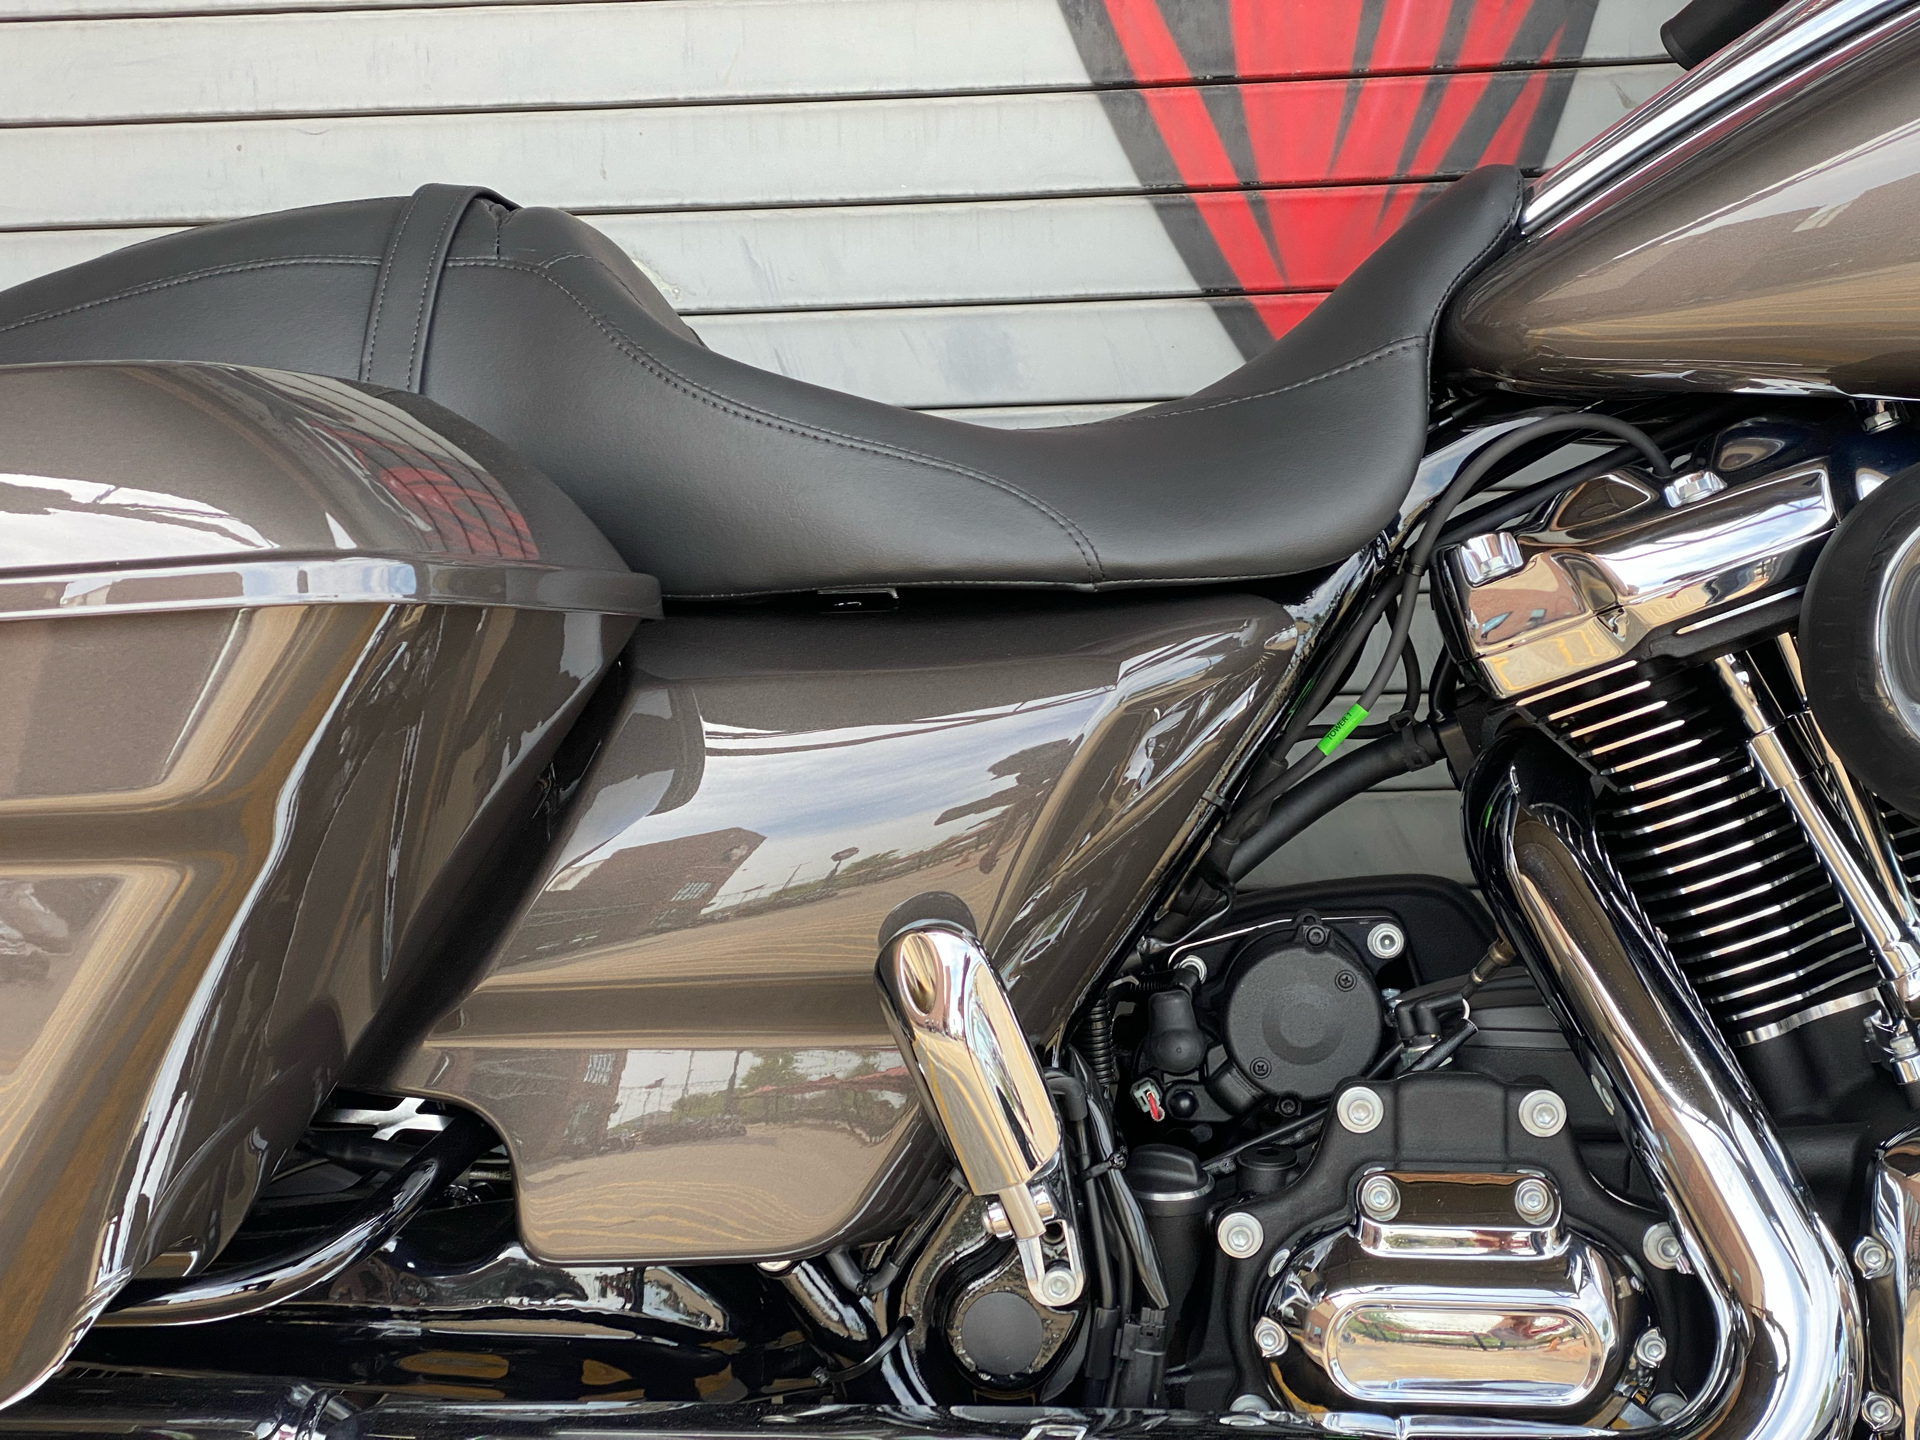 2023 Harley-Davidson Road Glide® Special in Carrollton, Texas - Photo 6